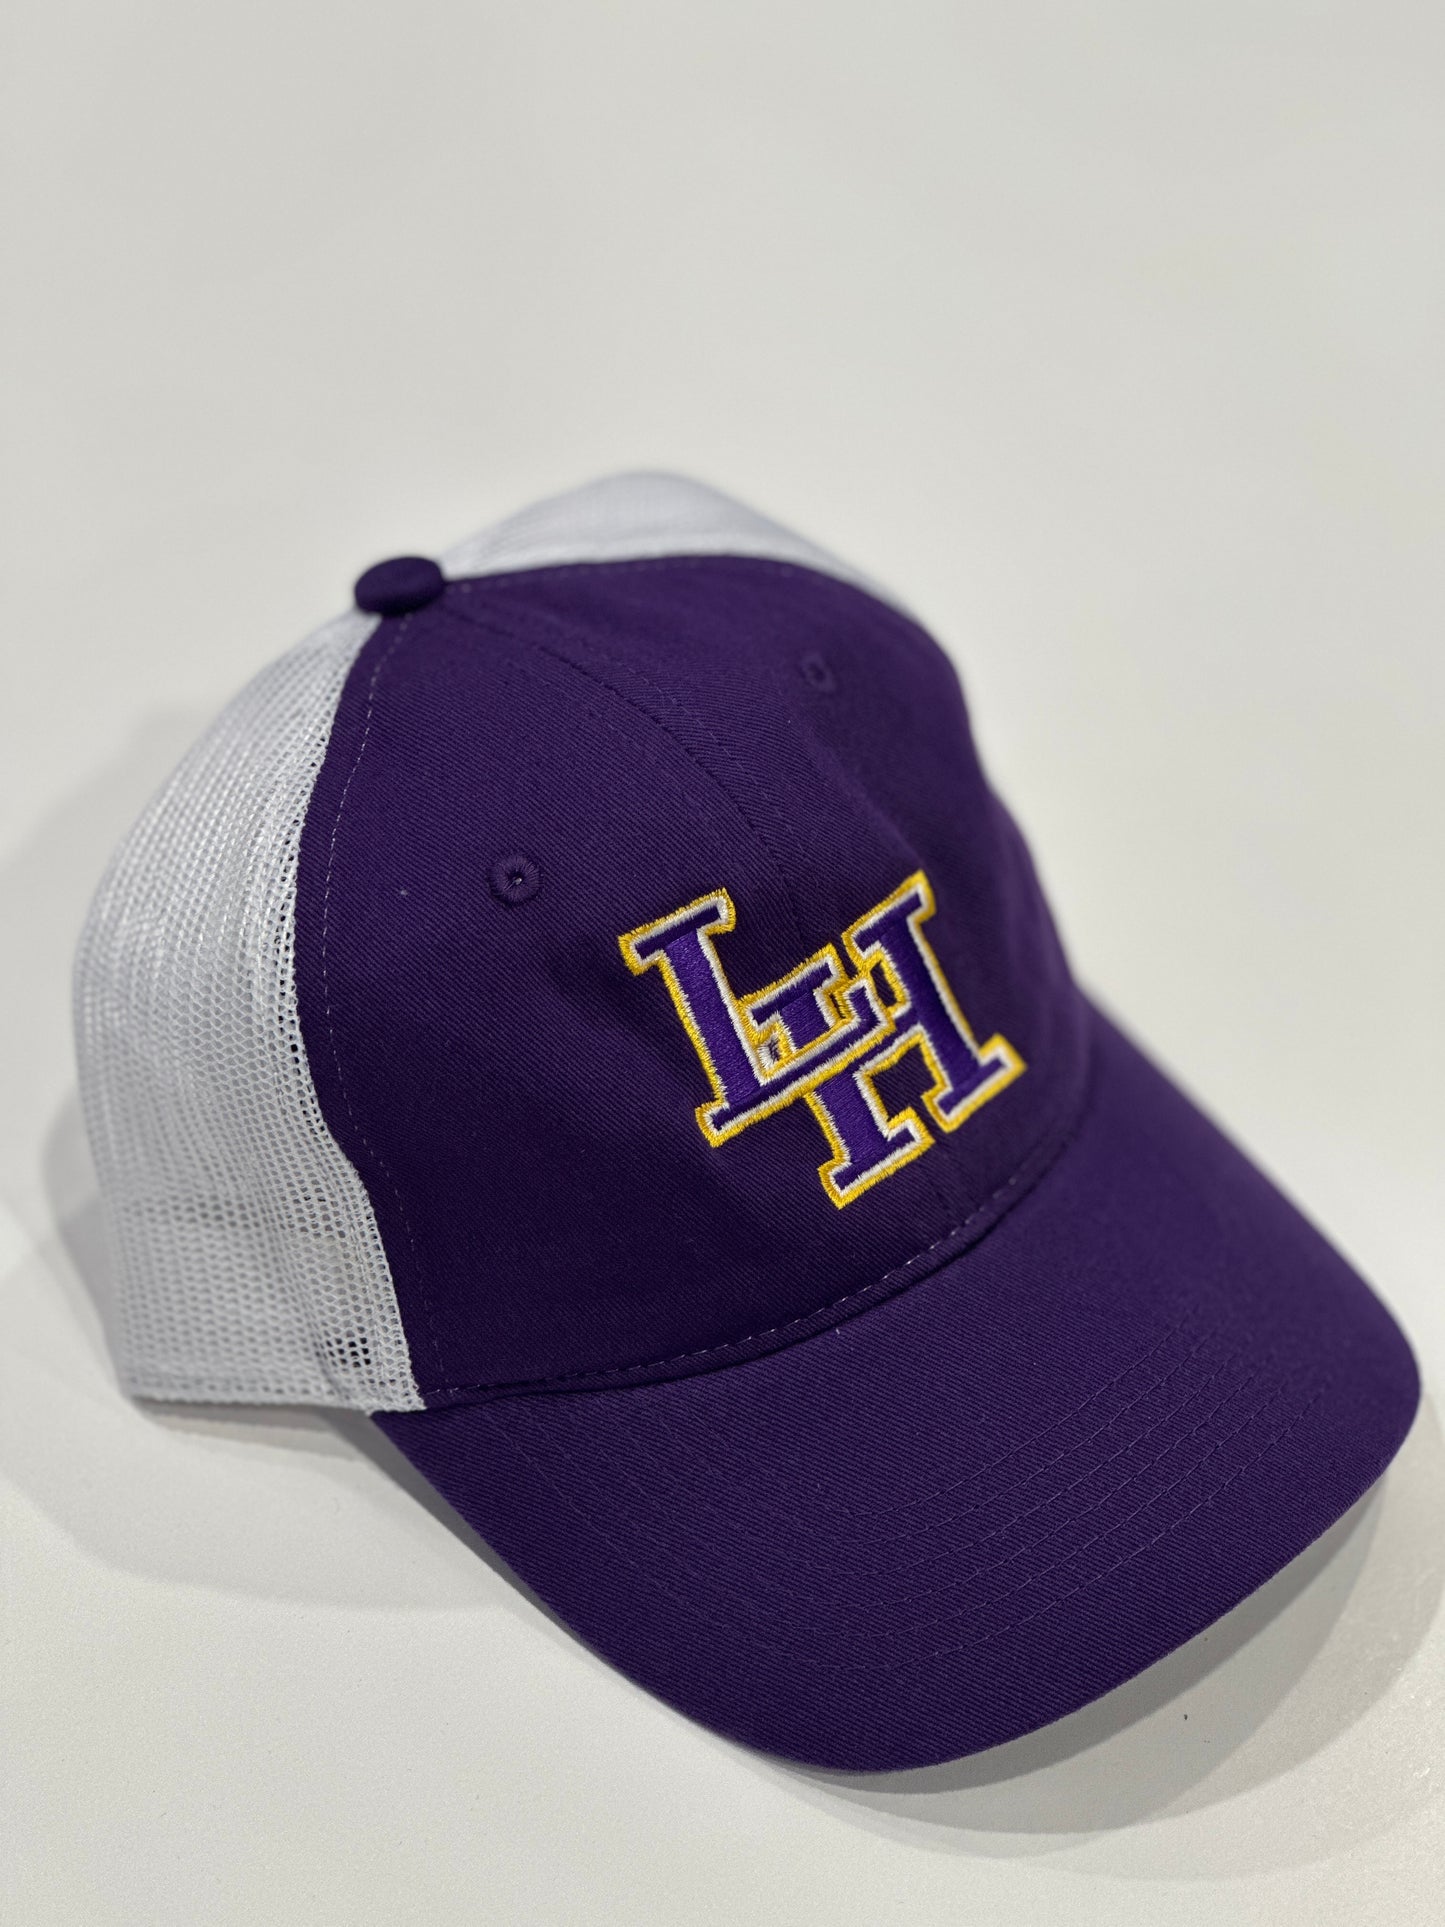 OC LH Purple & White Snapback Hat